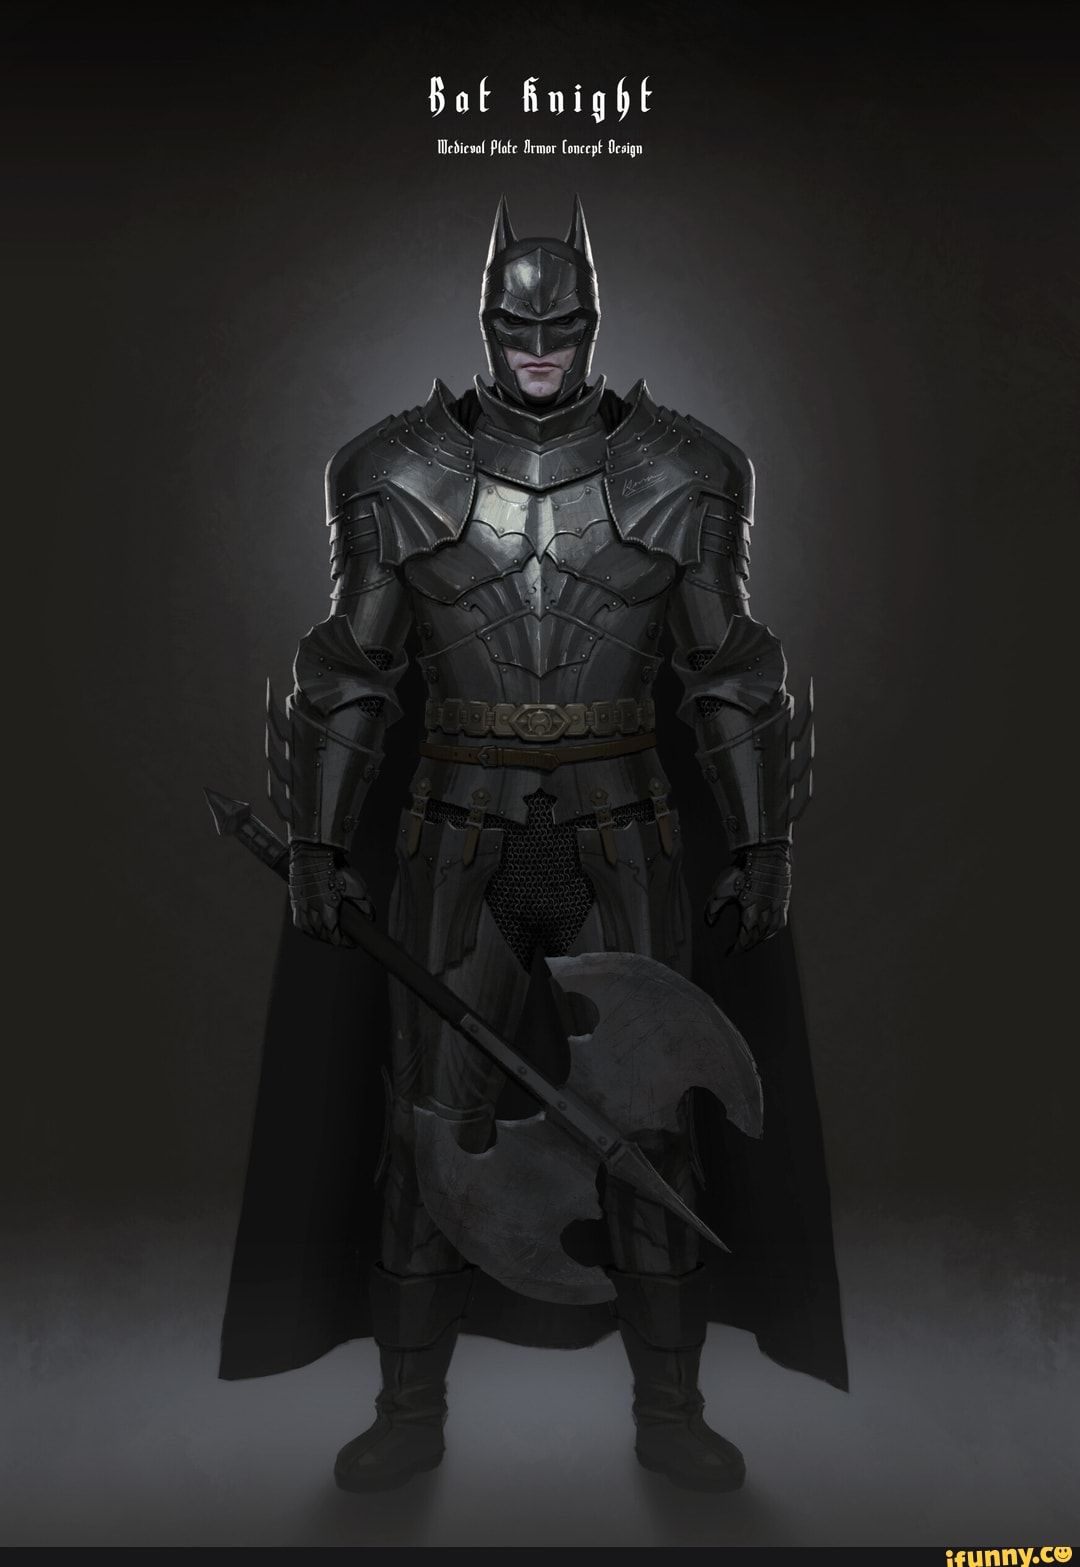 Bat finight Wedicval Plate Armor Concept Oesign - iFunny Brazil